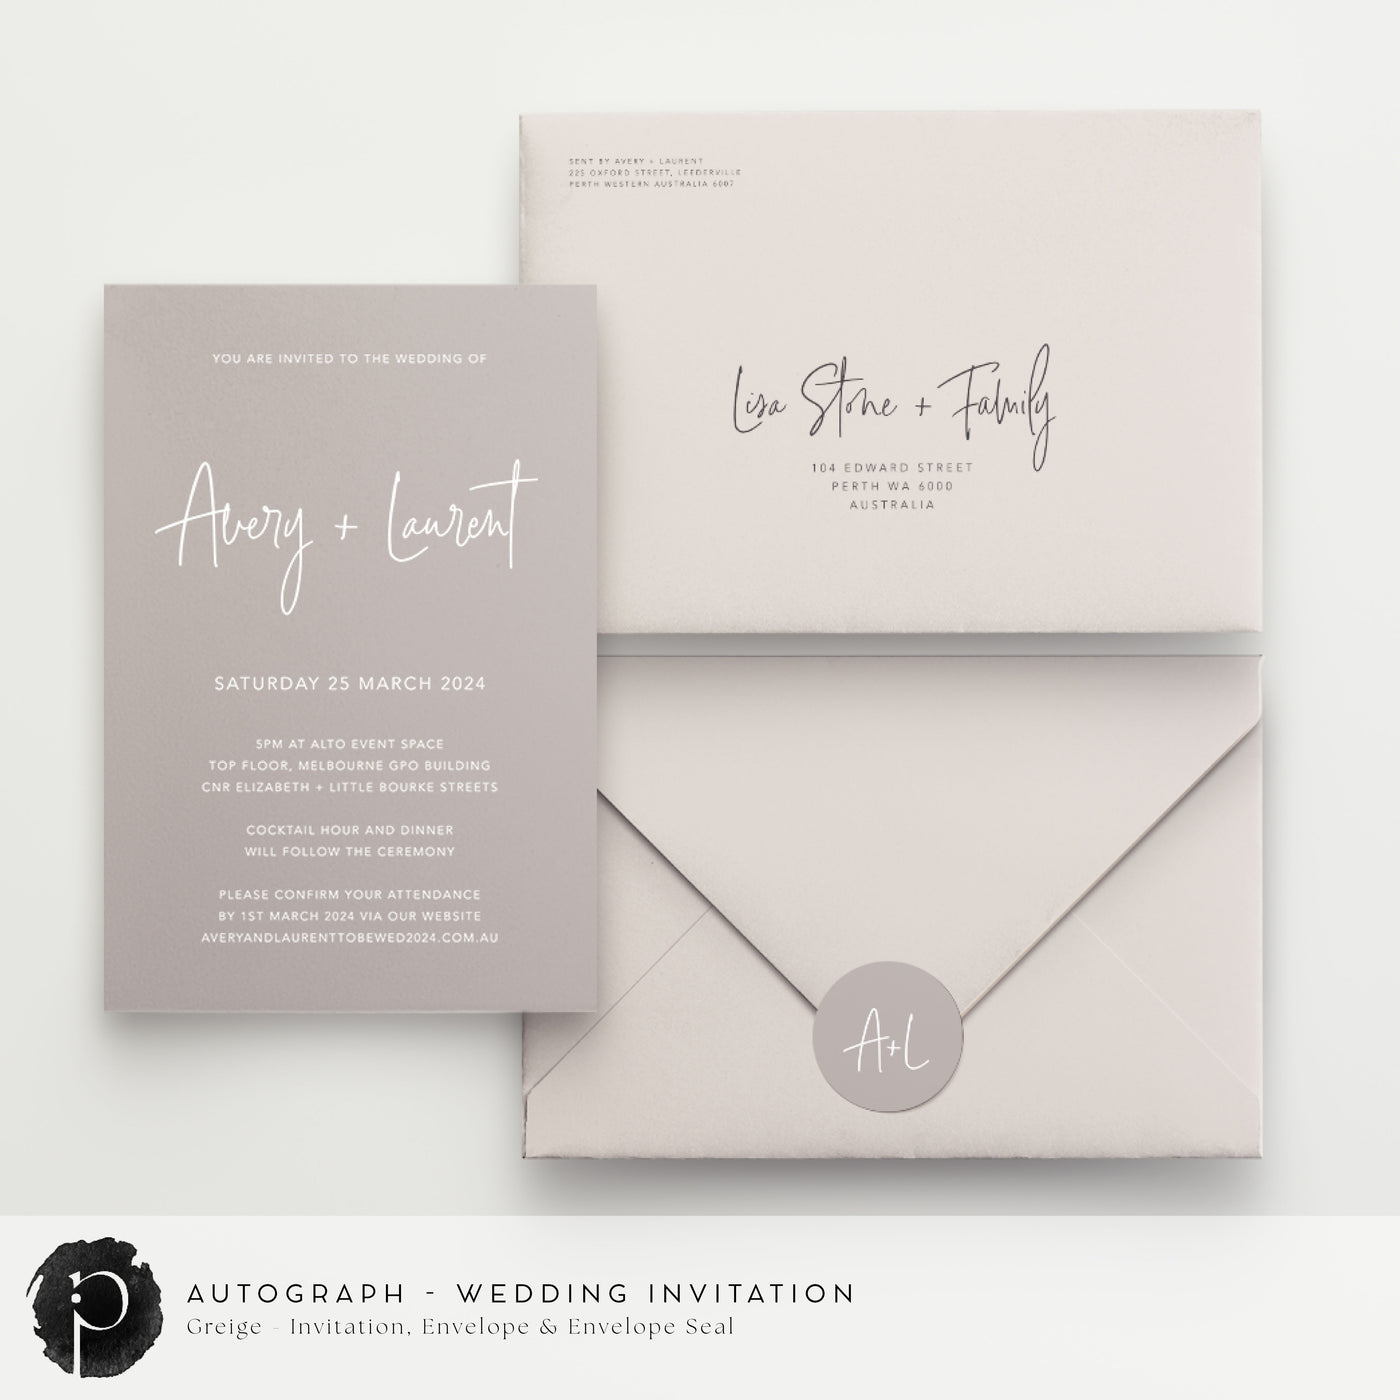 Autograph - Wedding Invitations